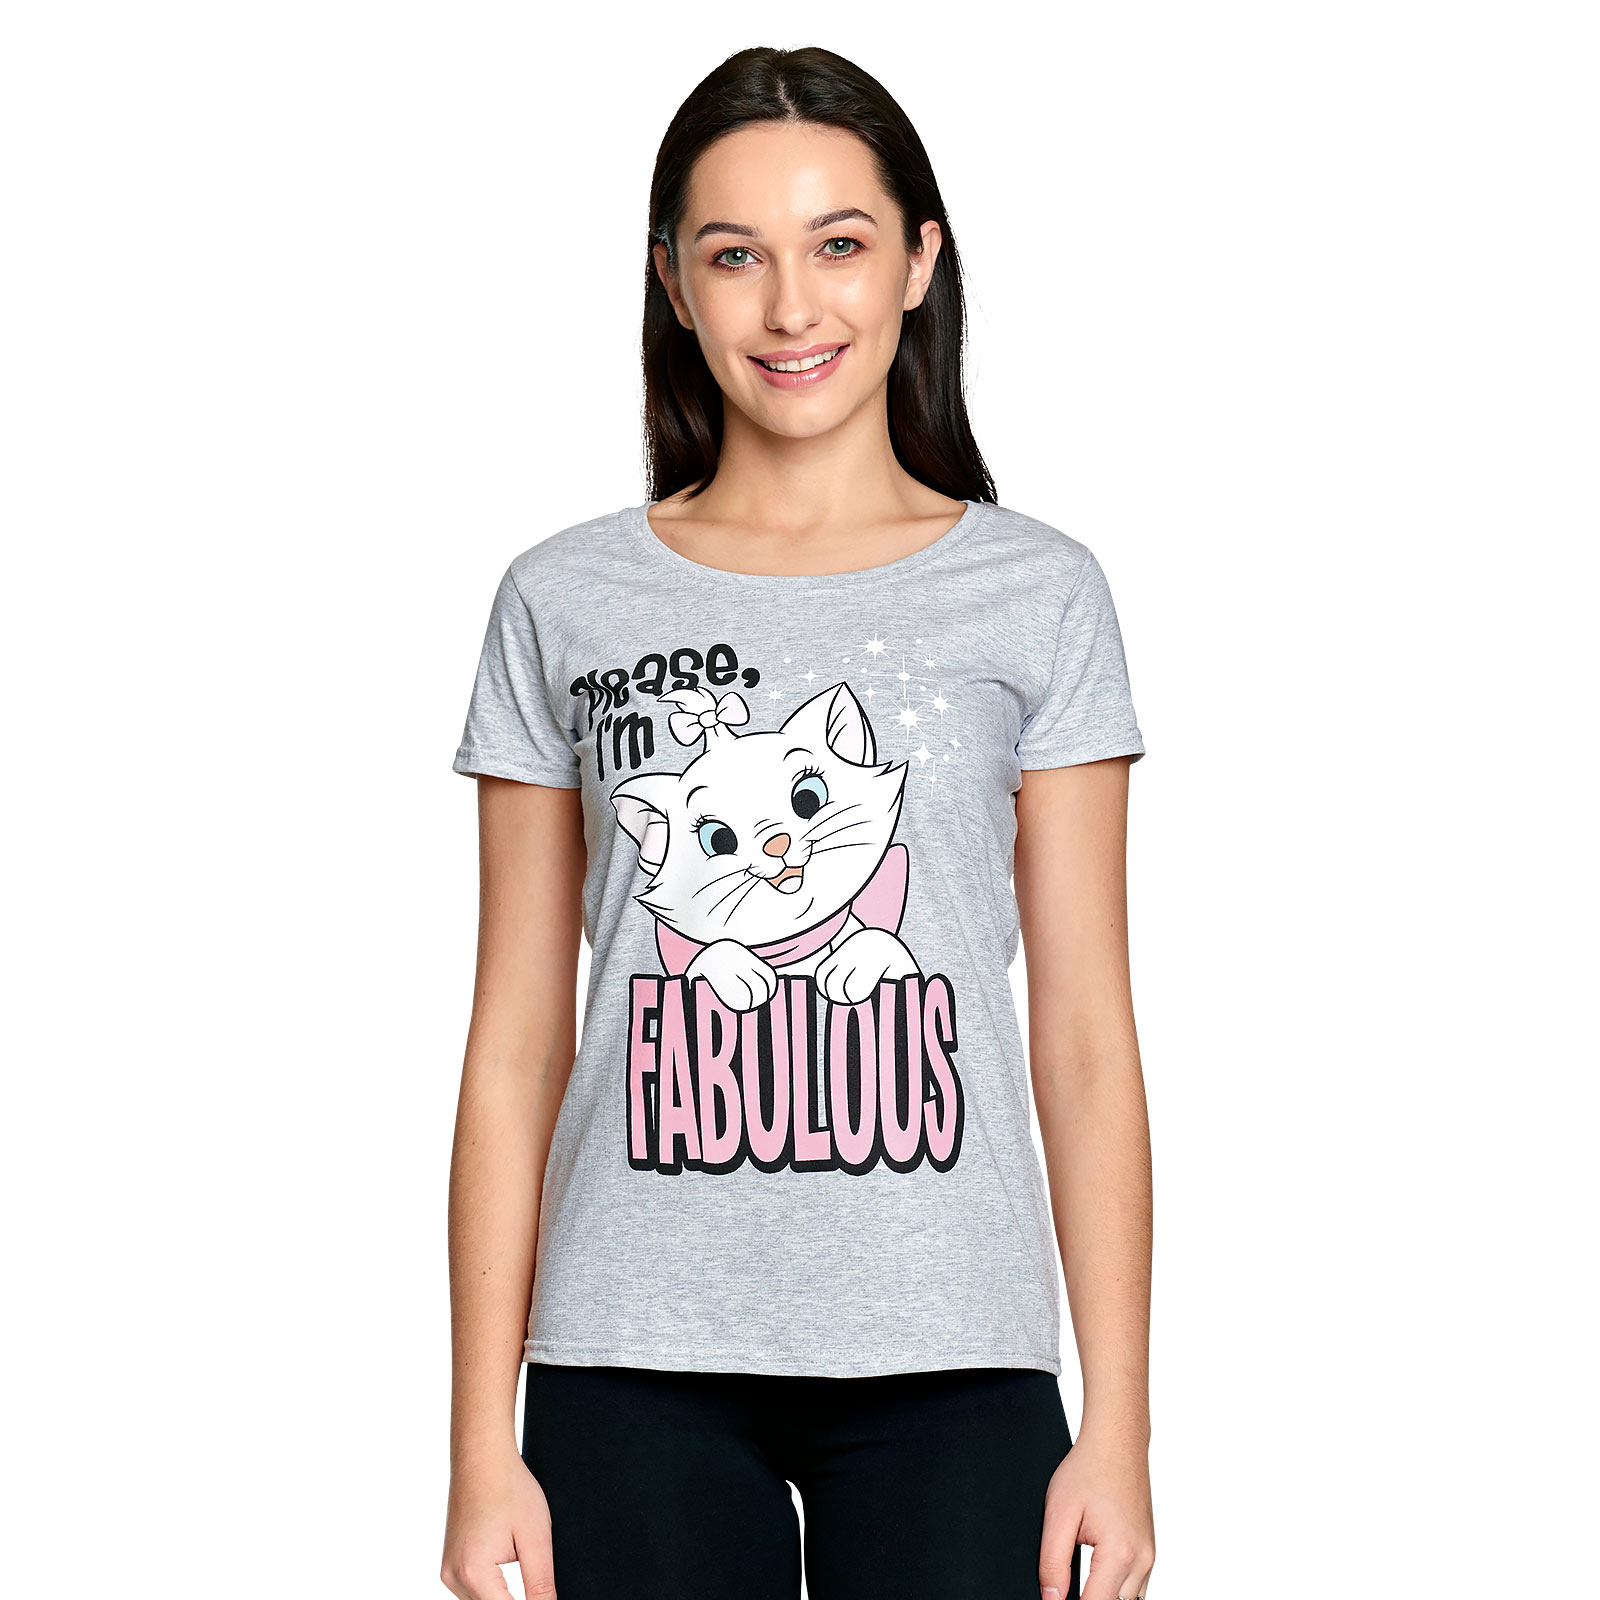 Aristocats - T-shirt femme Marie Fabulous gris